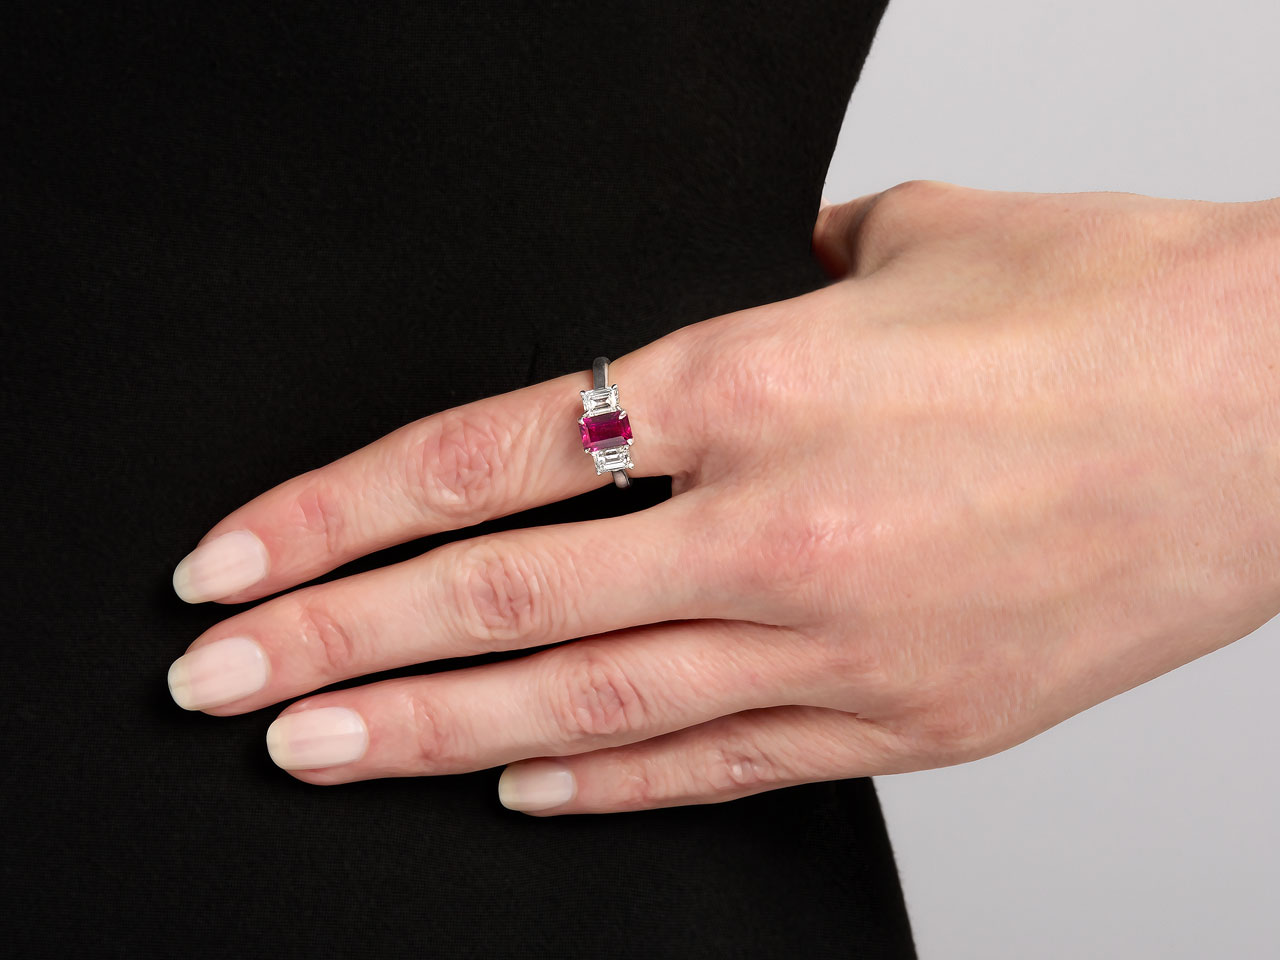 Beladora 'Bespoke' Three Stone Burma Ruby and Diamond Ring in Platinum